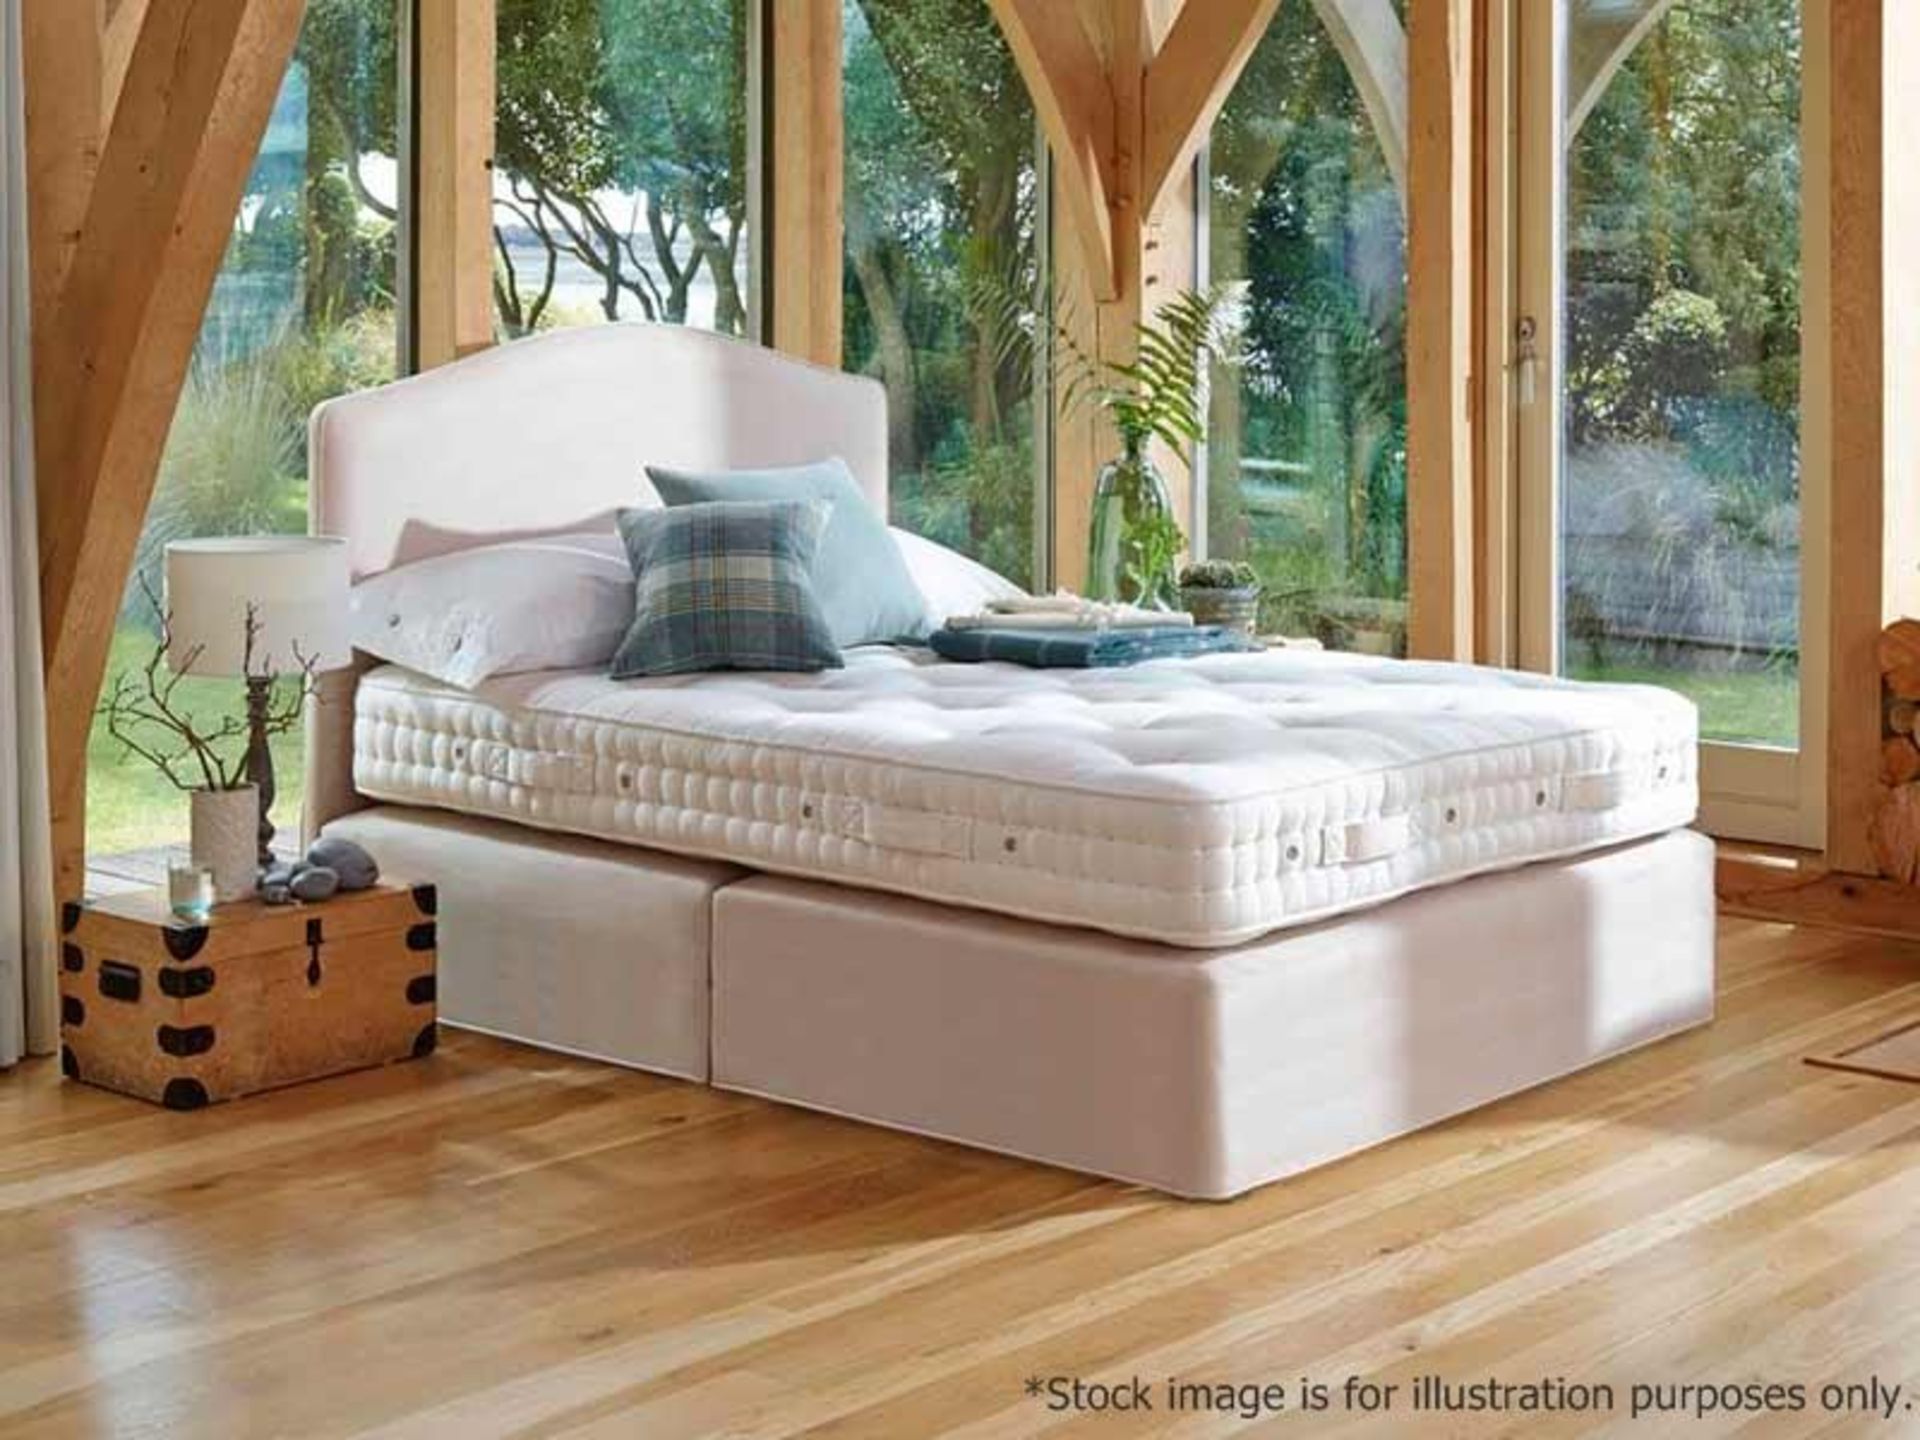 1 x VISPRING Luxury 'Elite' KING SIZE Mattress With Deluxe Divan Bed Base - Medium Tension